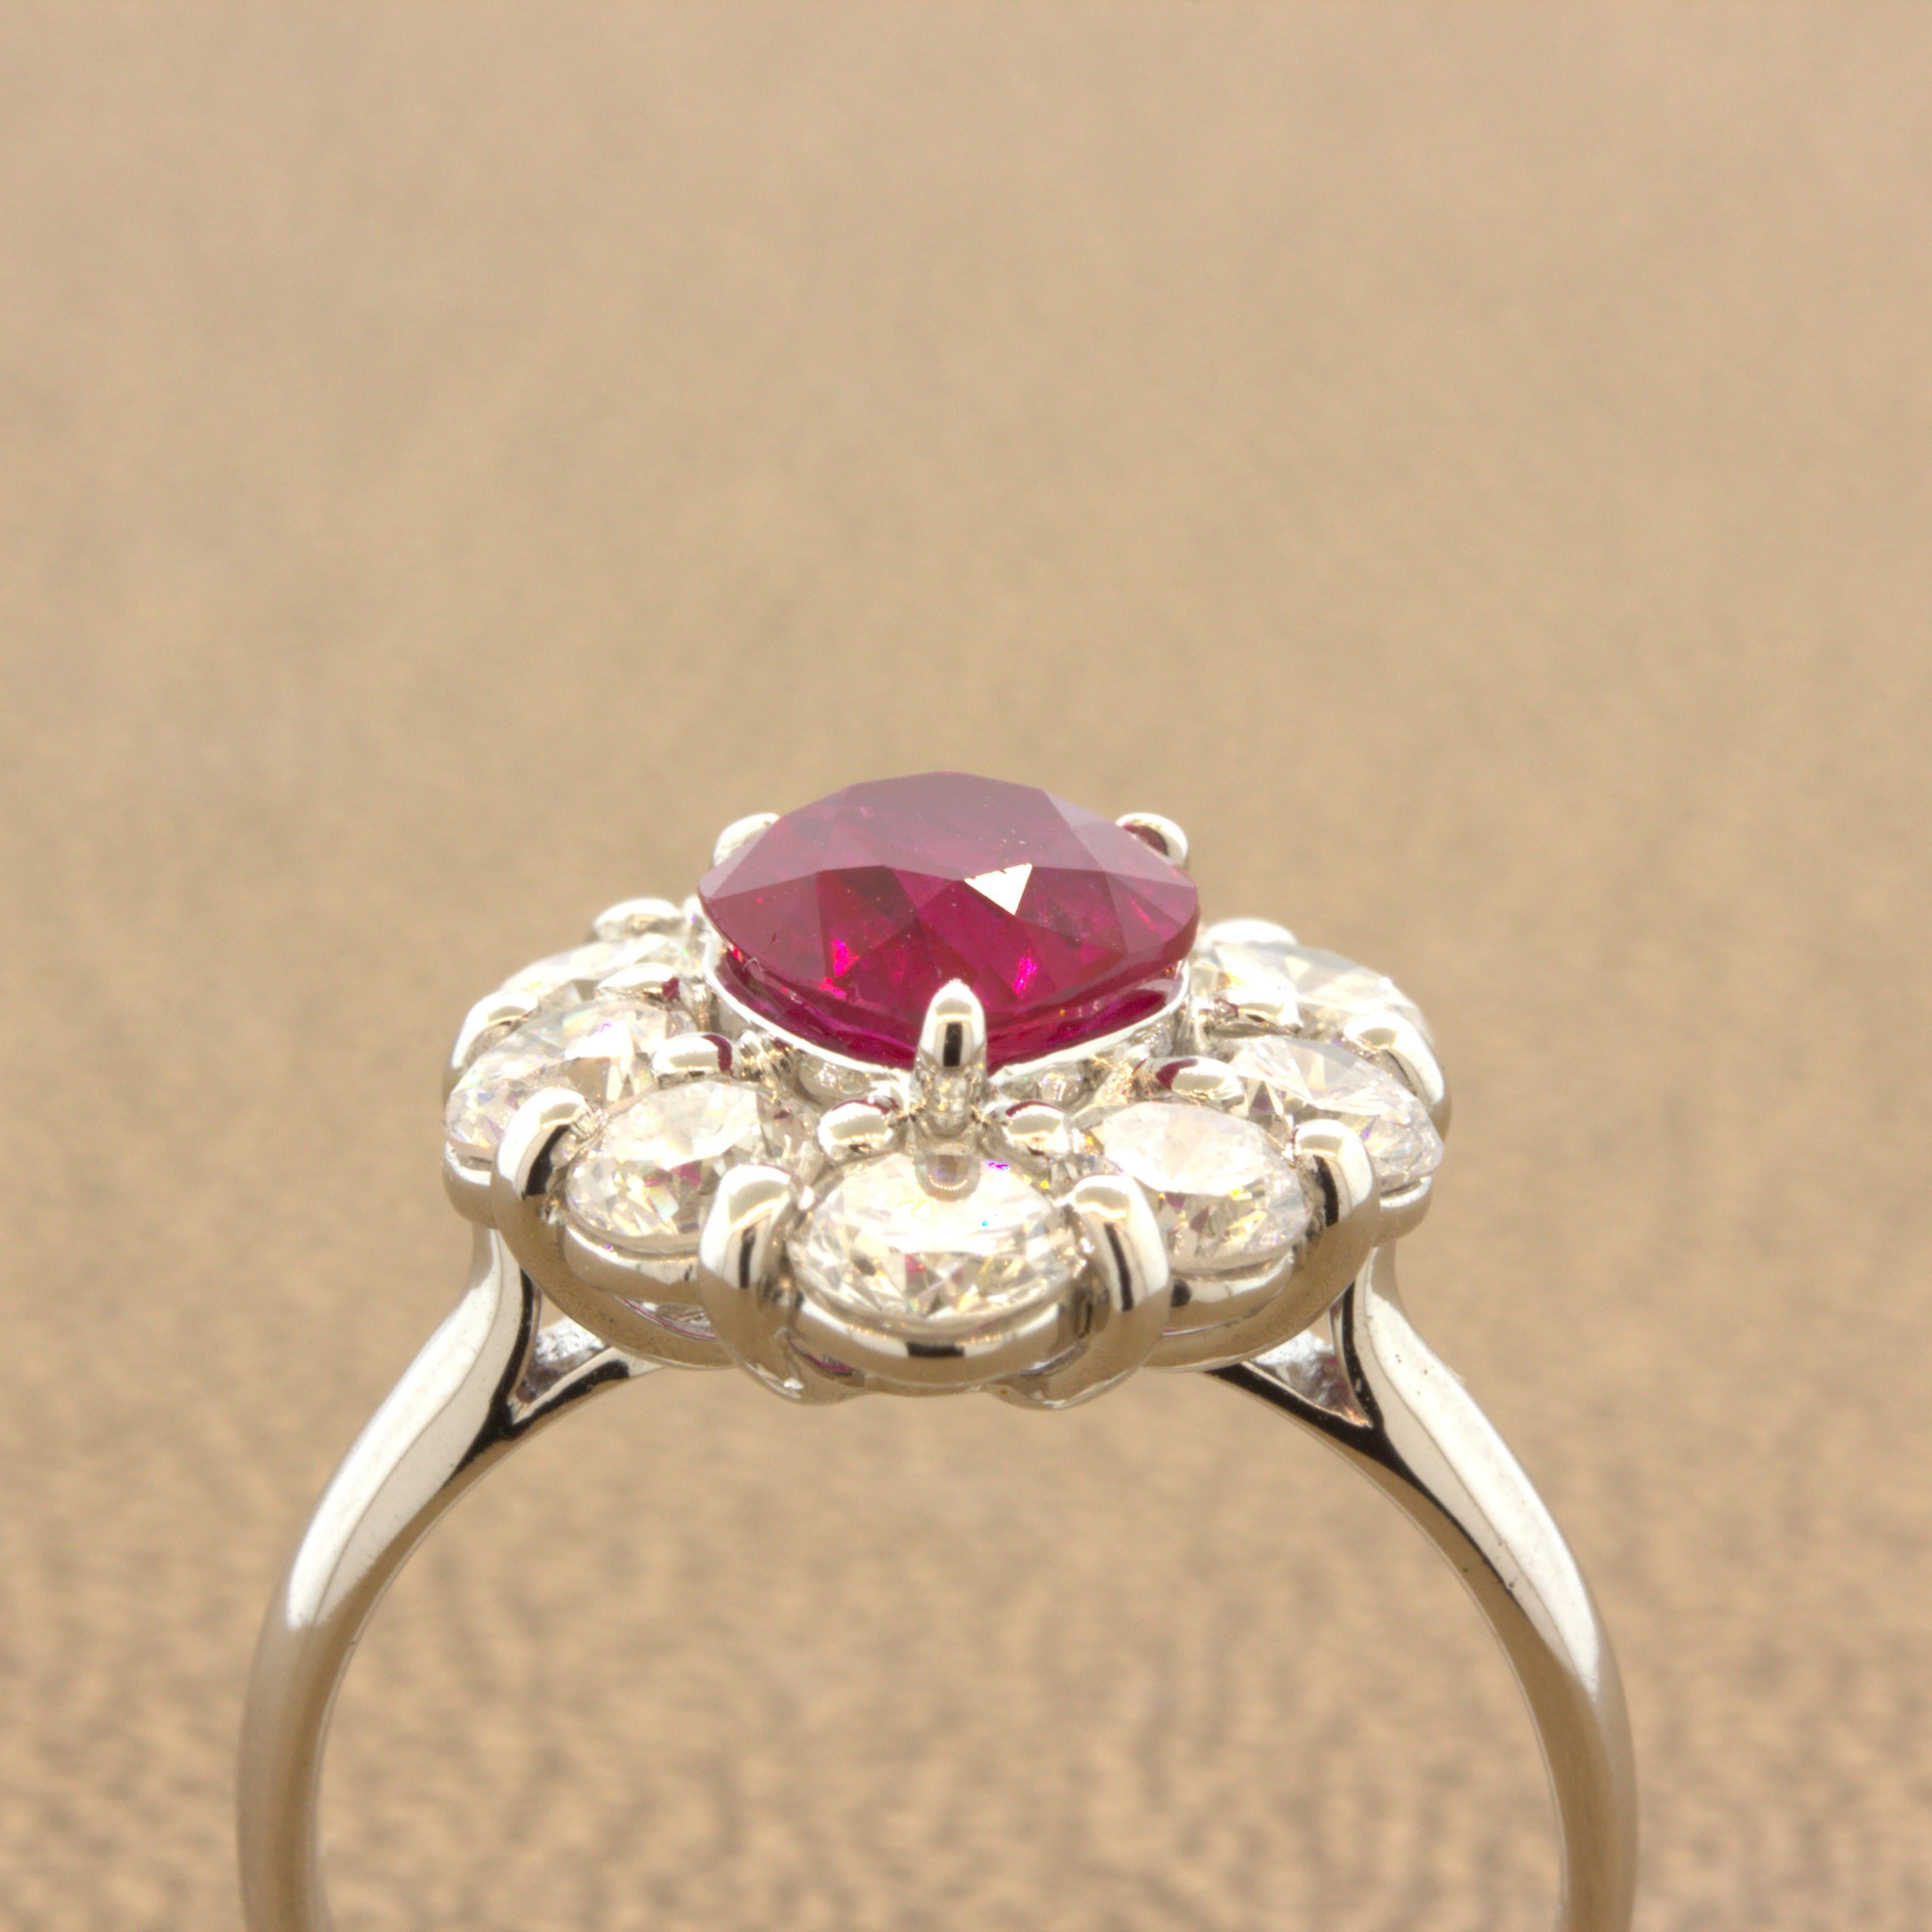 Superb 1.79 Carat Burmese Ruby Diamond Platinum Ring, GIA Certified For Sale 2